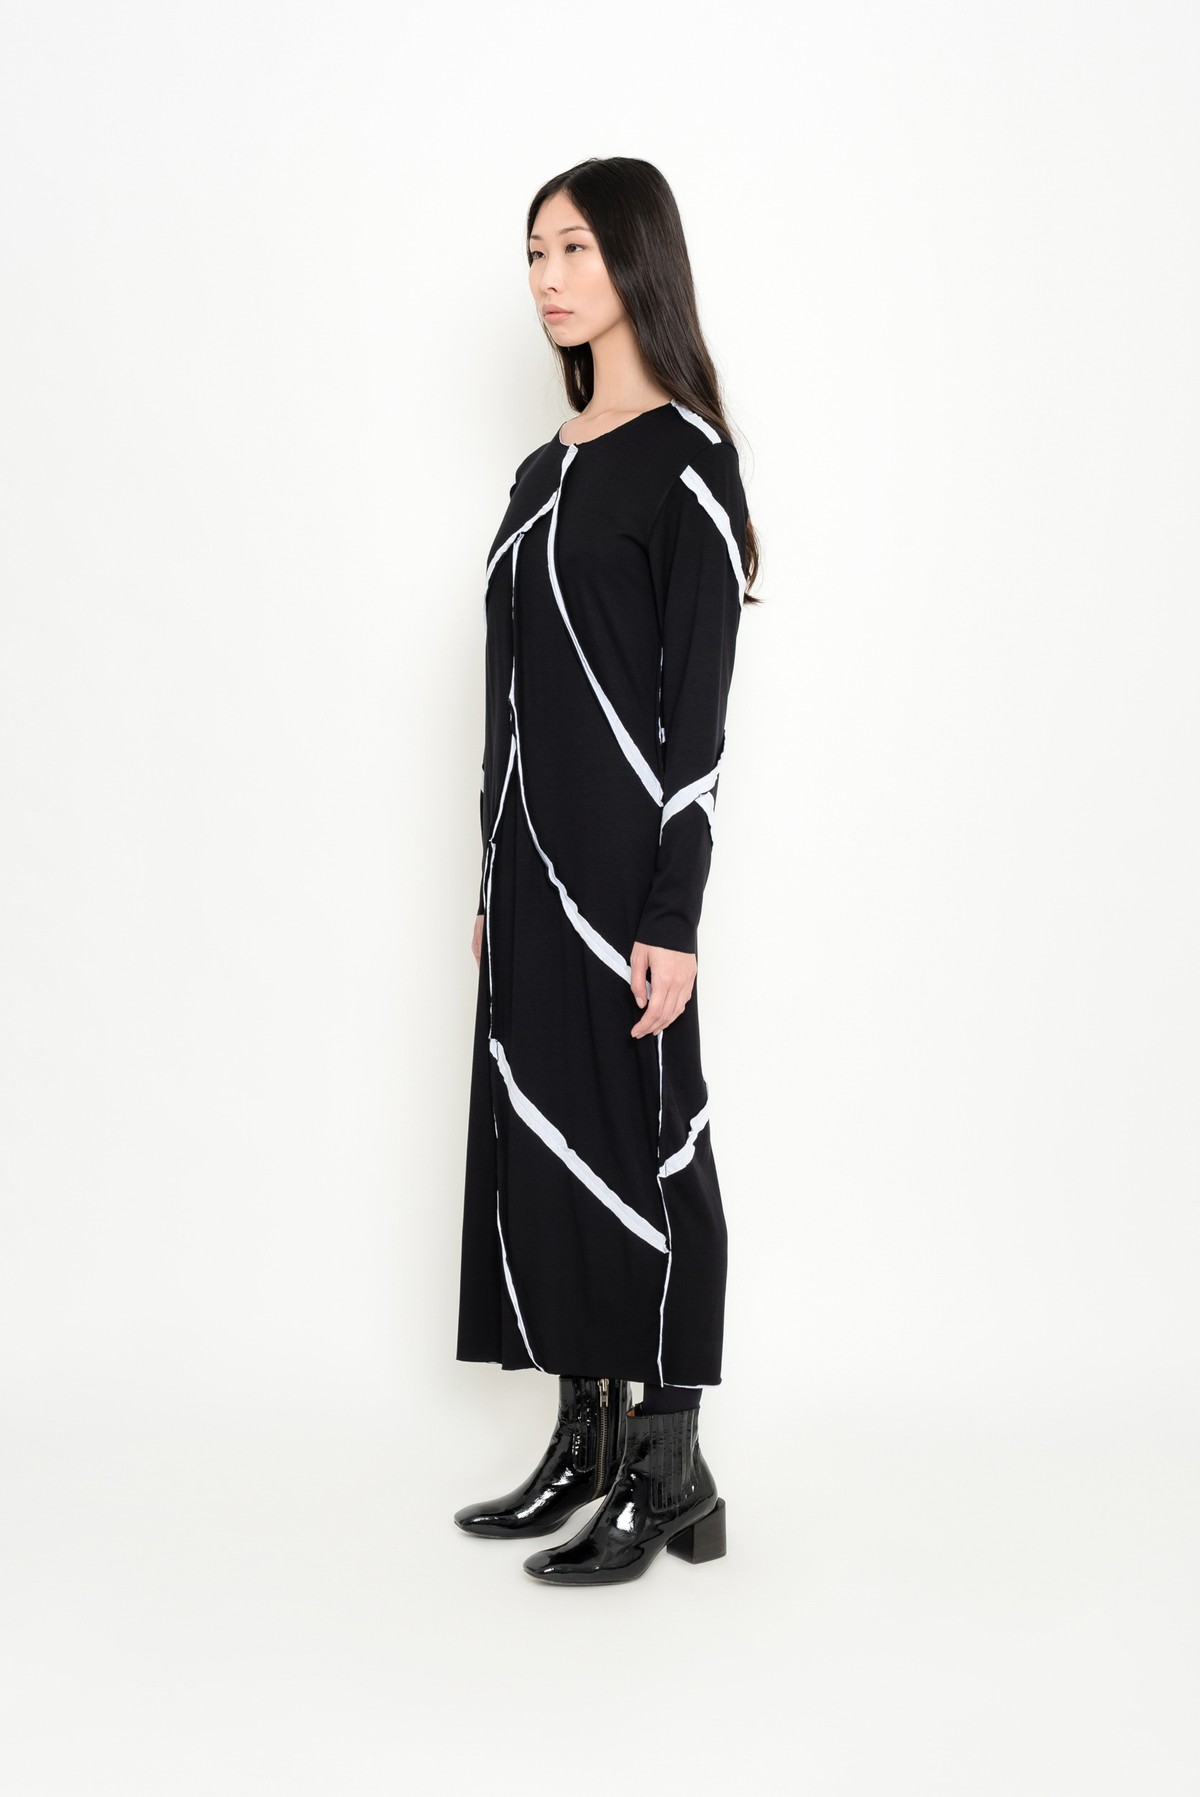 vestido com recortes estilo patchwork | long sleeve dress with patchwork cutouts